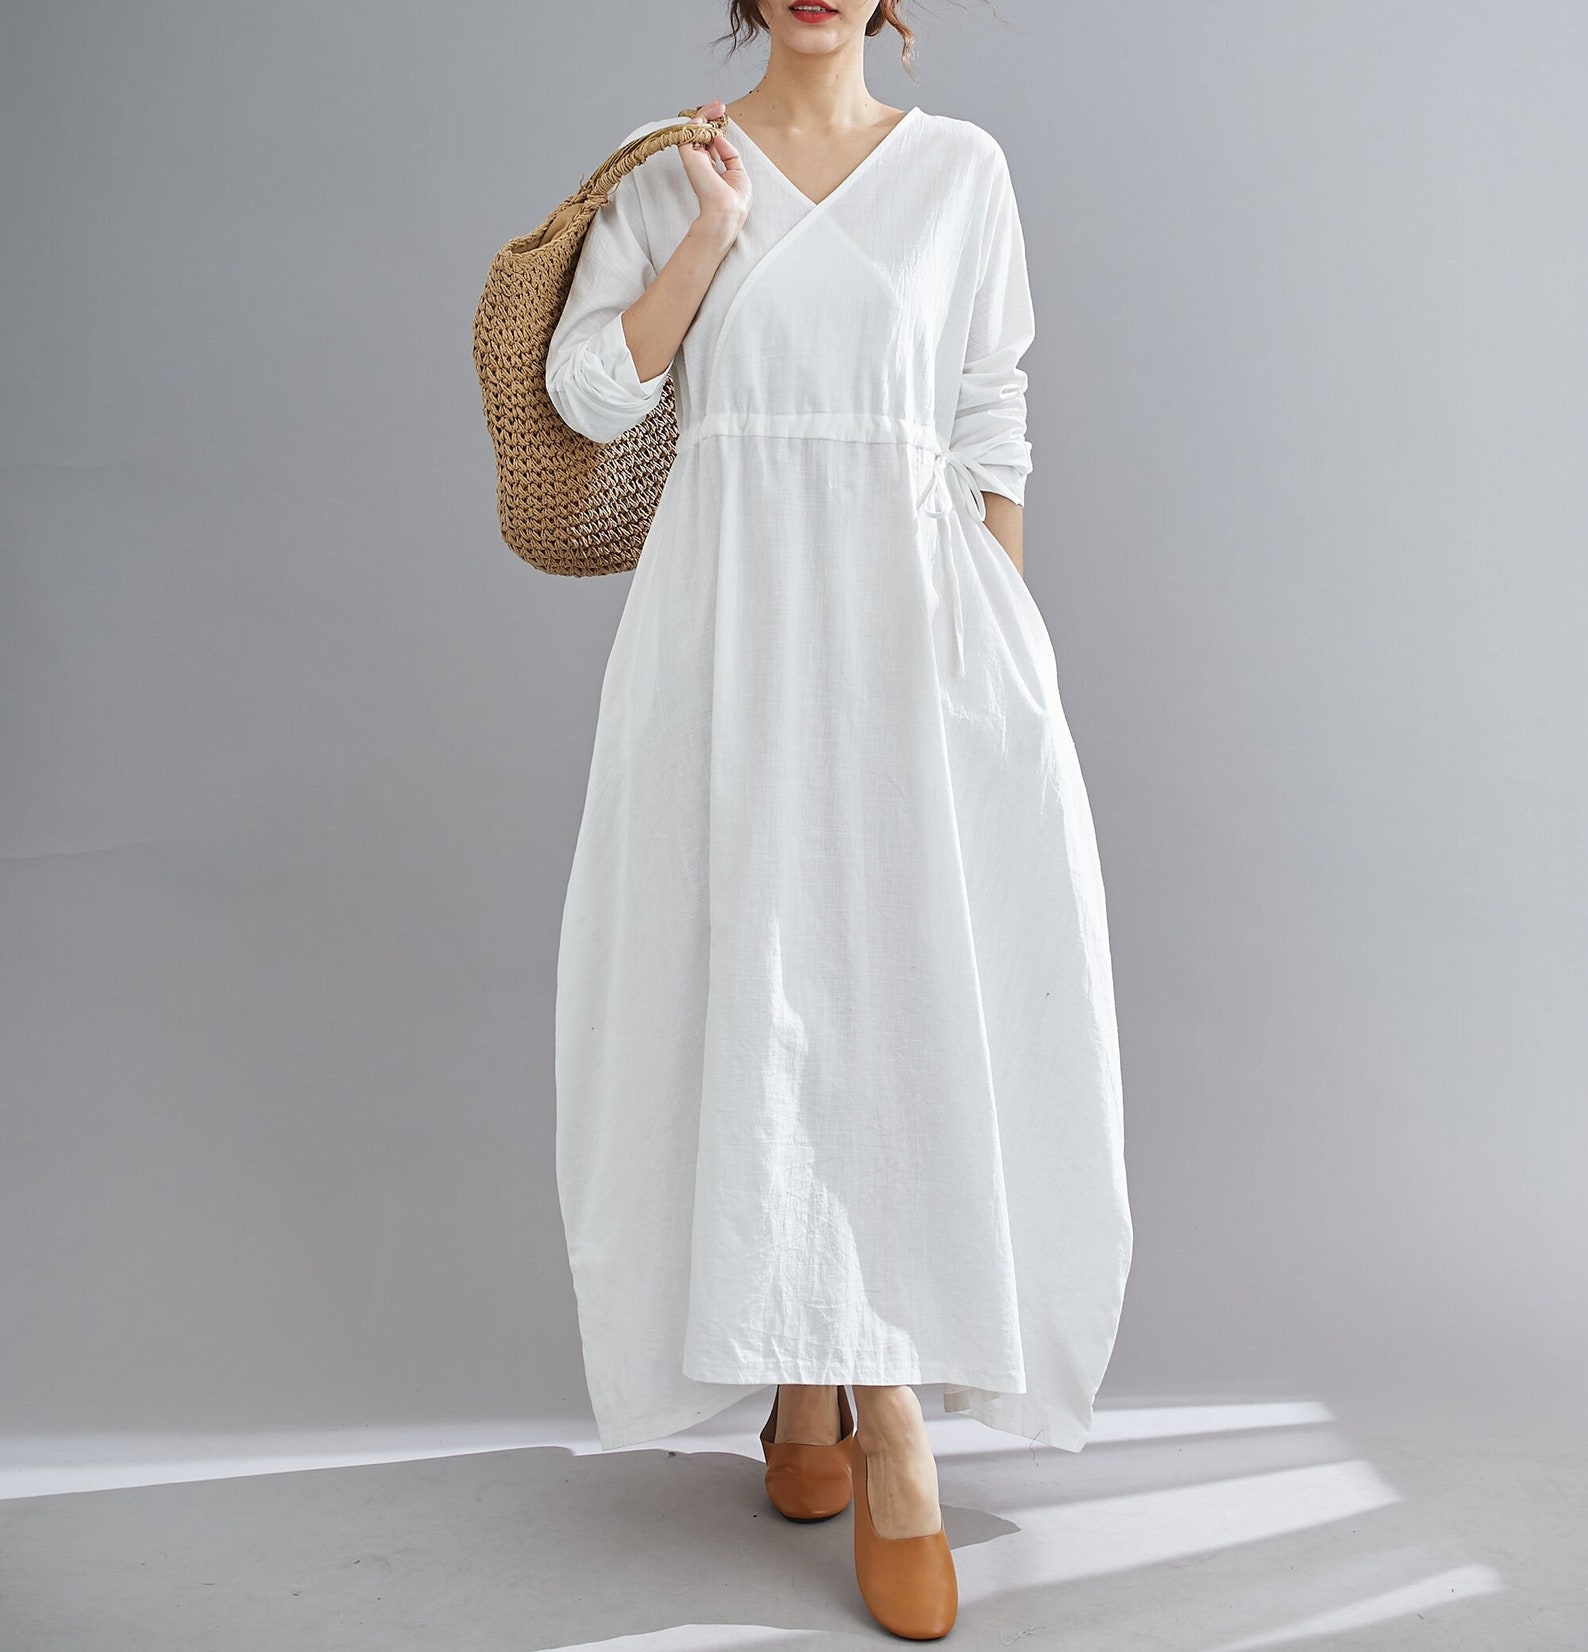 White Linen Maxi Dress Casual Long Sleeves Maternity Dress - Etsy